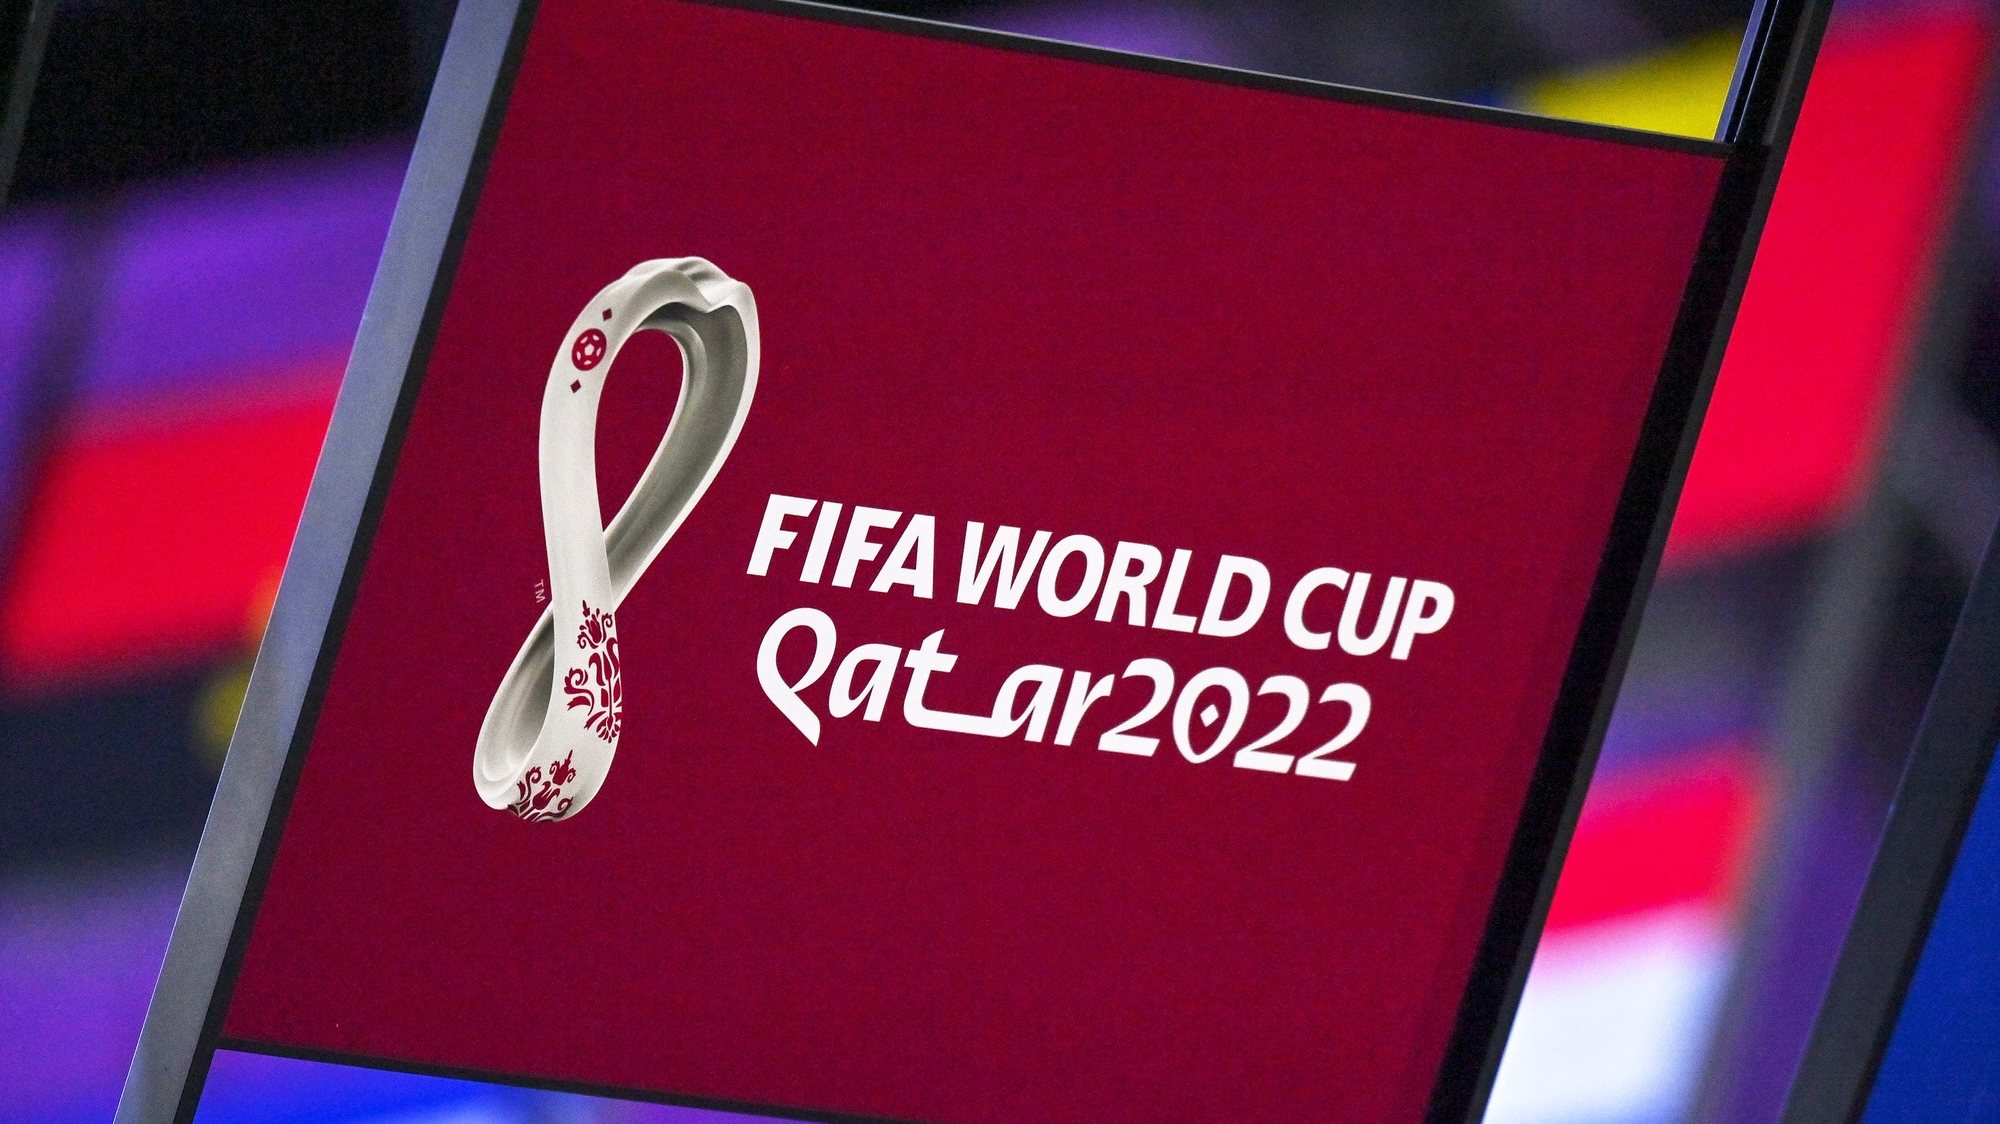 epa09861681 A FIFA World Cup Qatar 2022 sign during the 72nd FIFA Congress in Doha, Qatar, 31 March 2022.  EPA/NOUSHAD THEKKAYIL